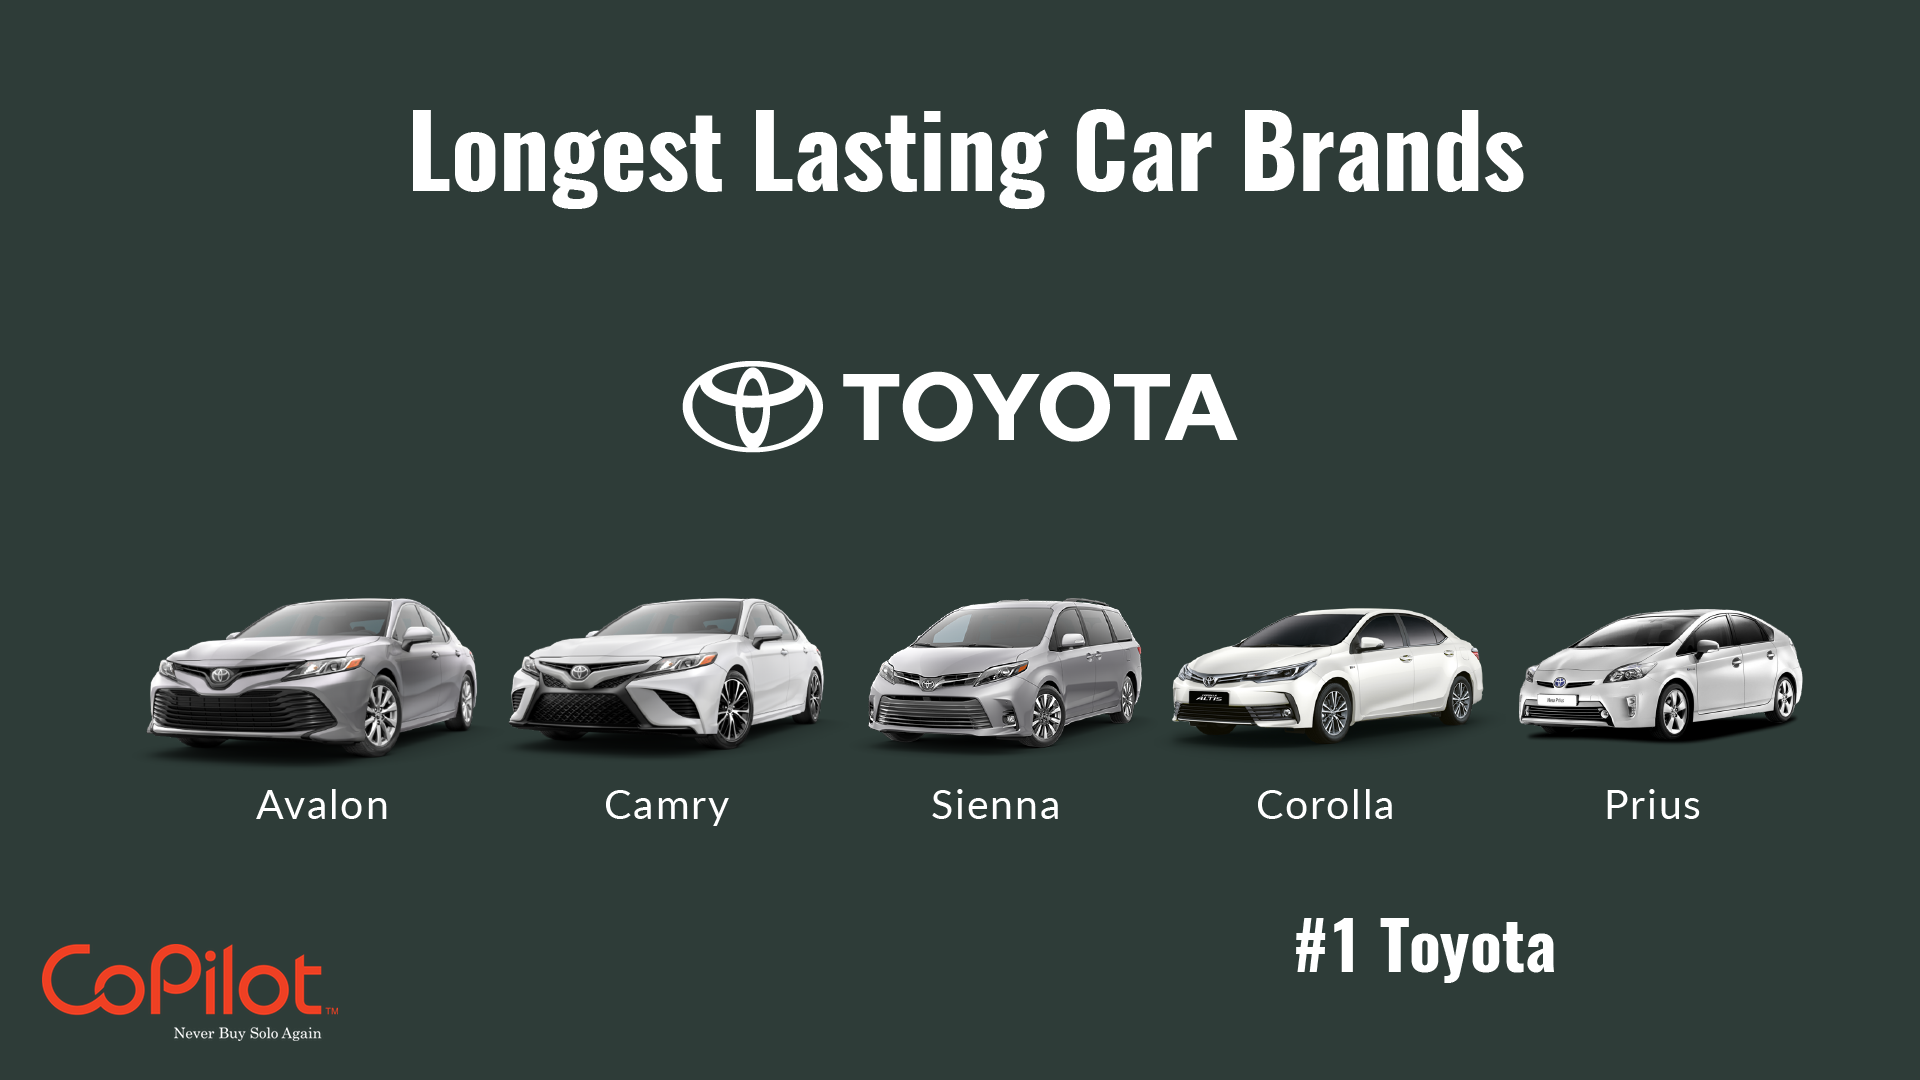 longest lasting car brand is Toyota